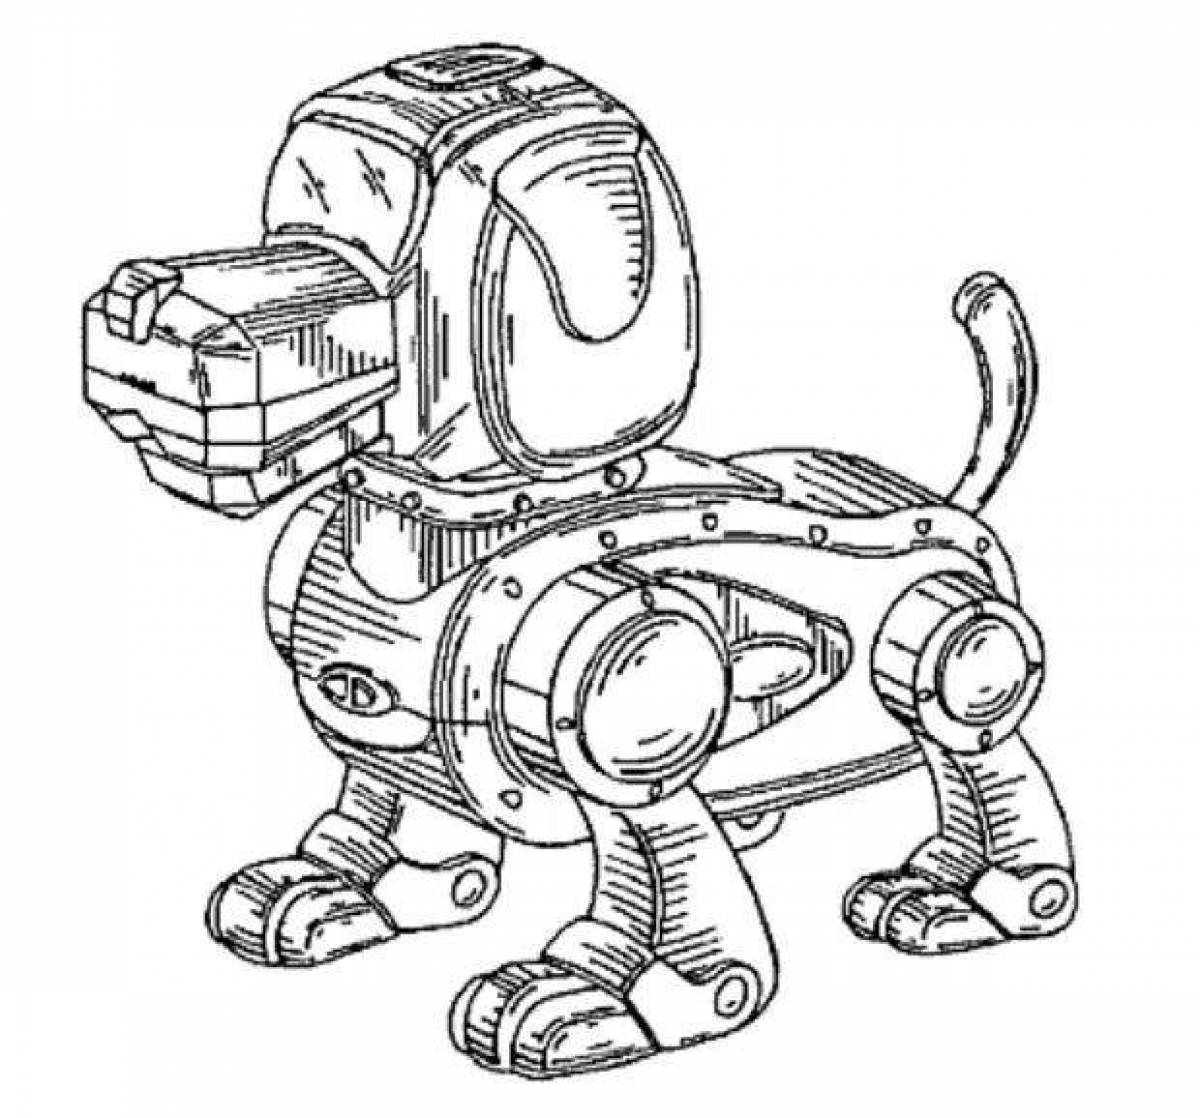 Cute robot dog coloring book